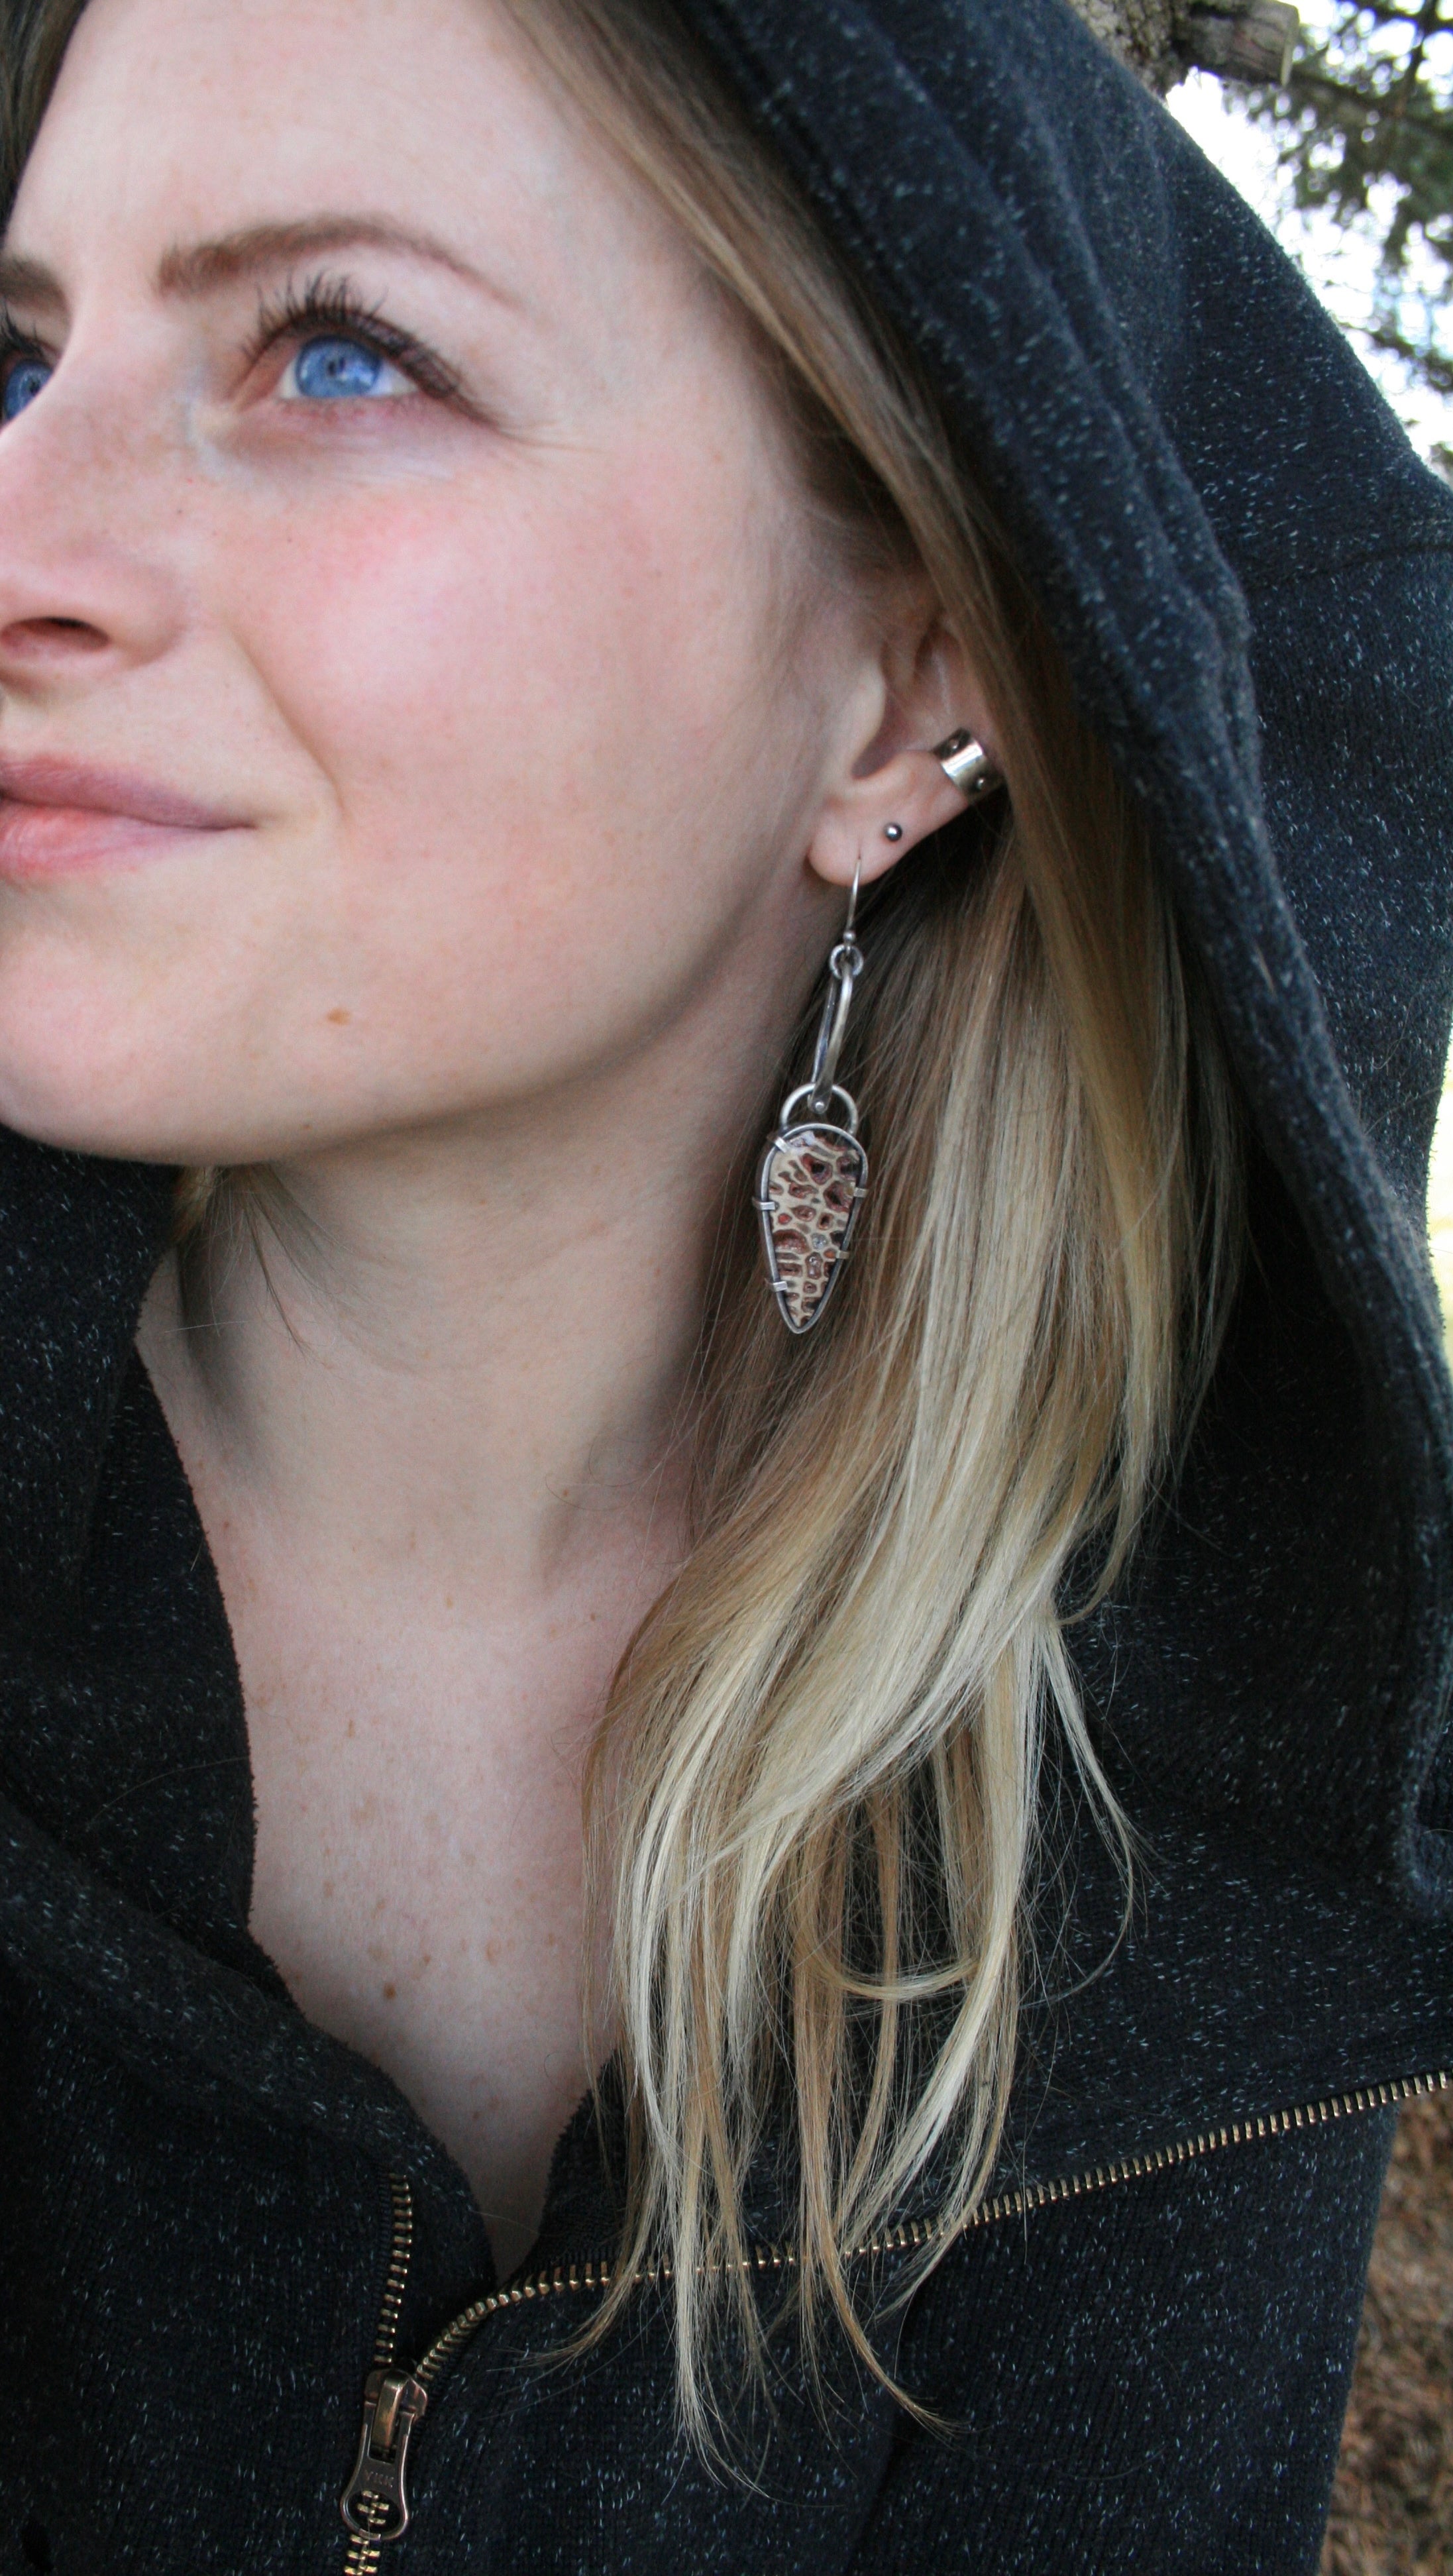 Petrified Wood Earrings